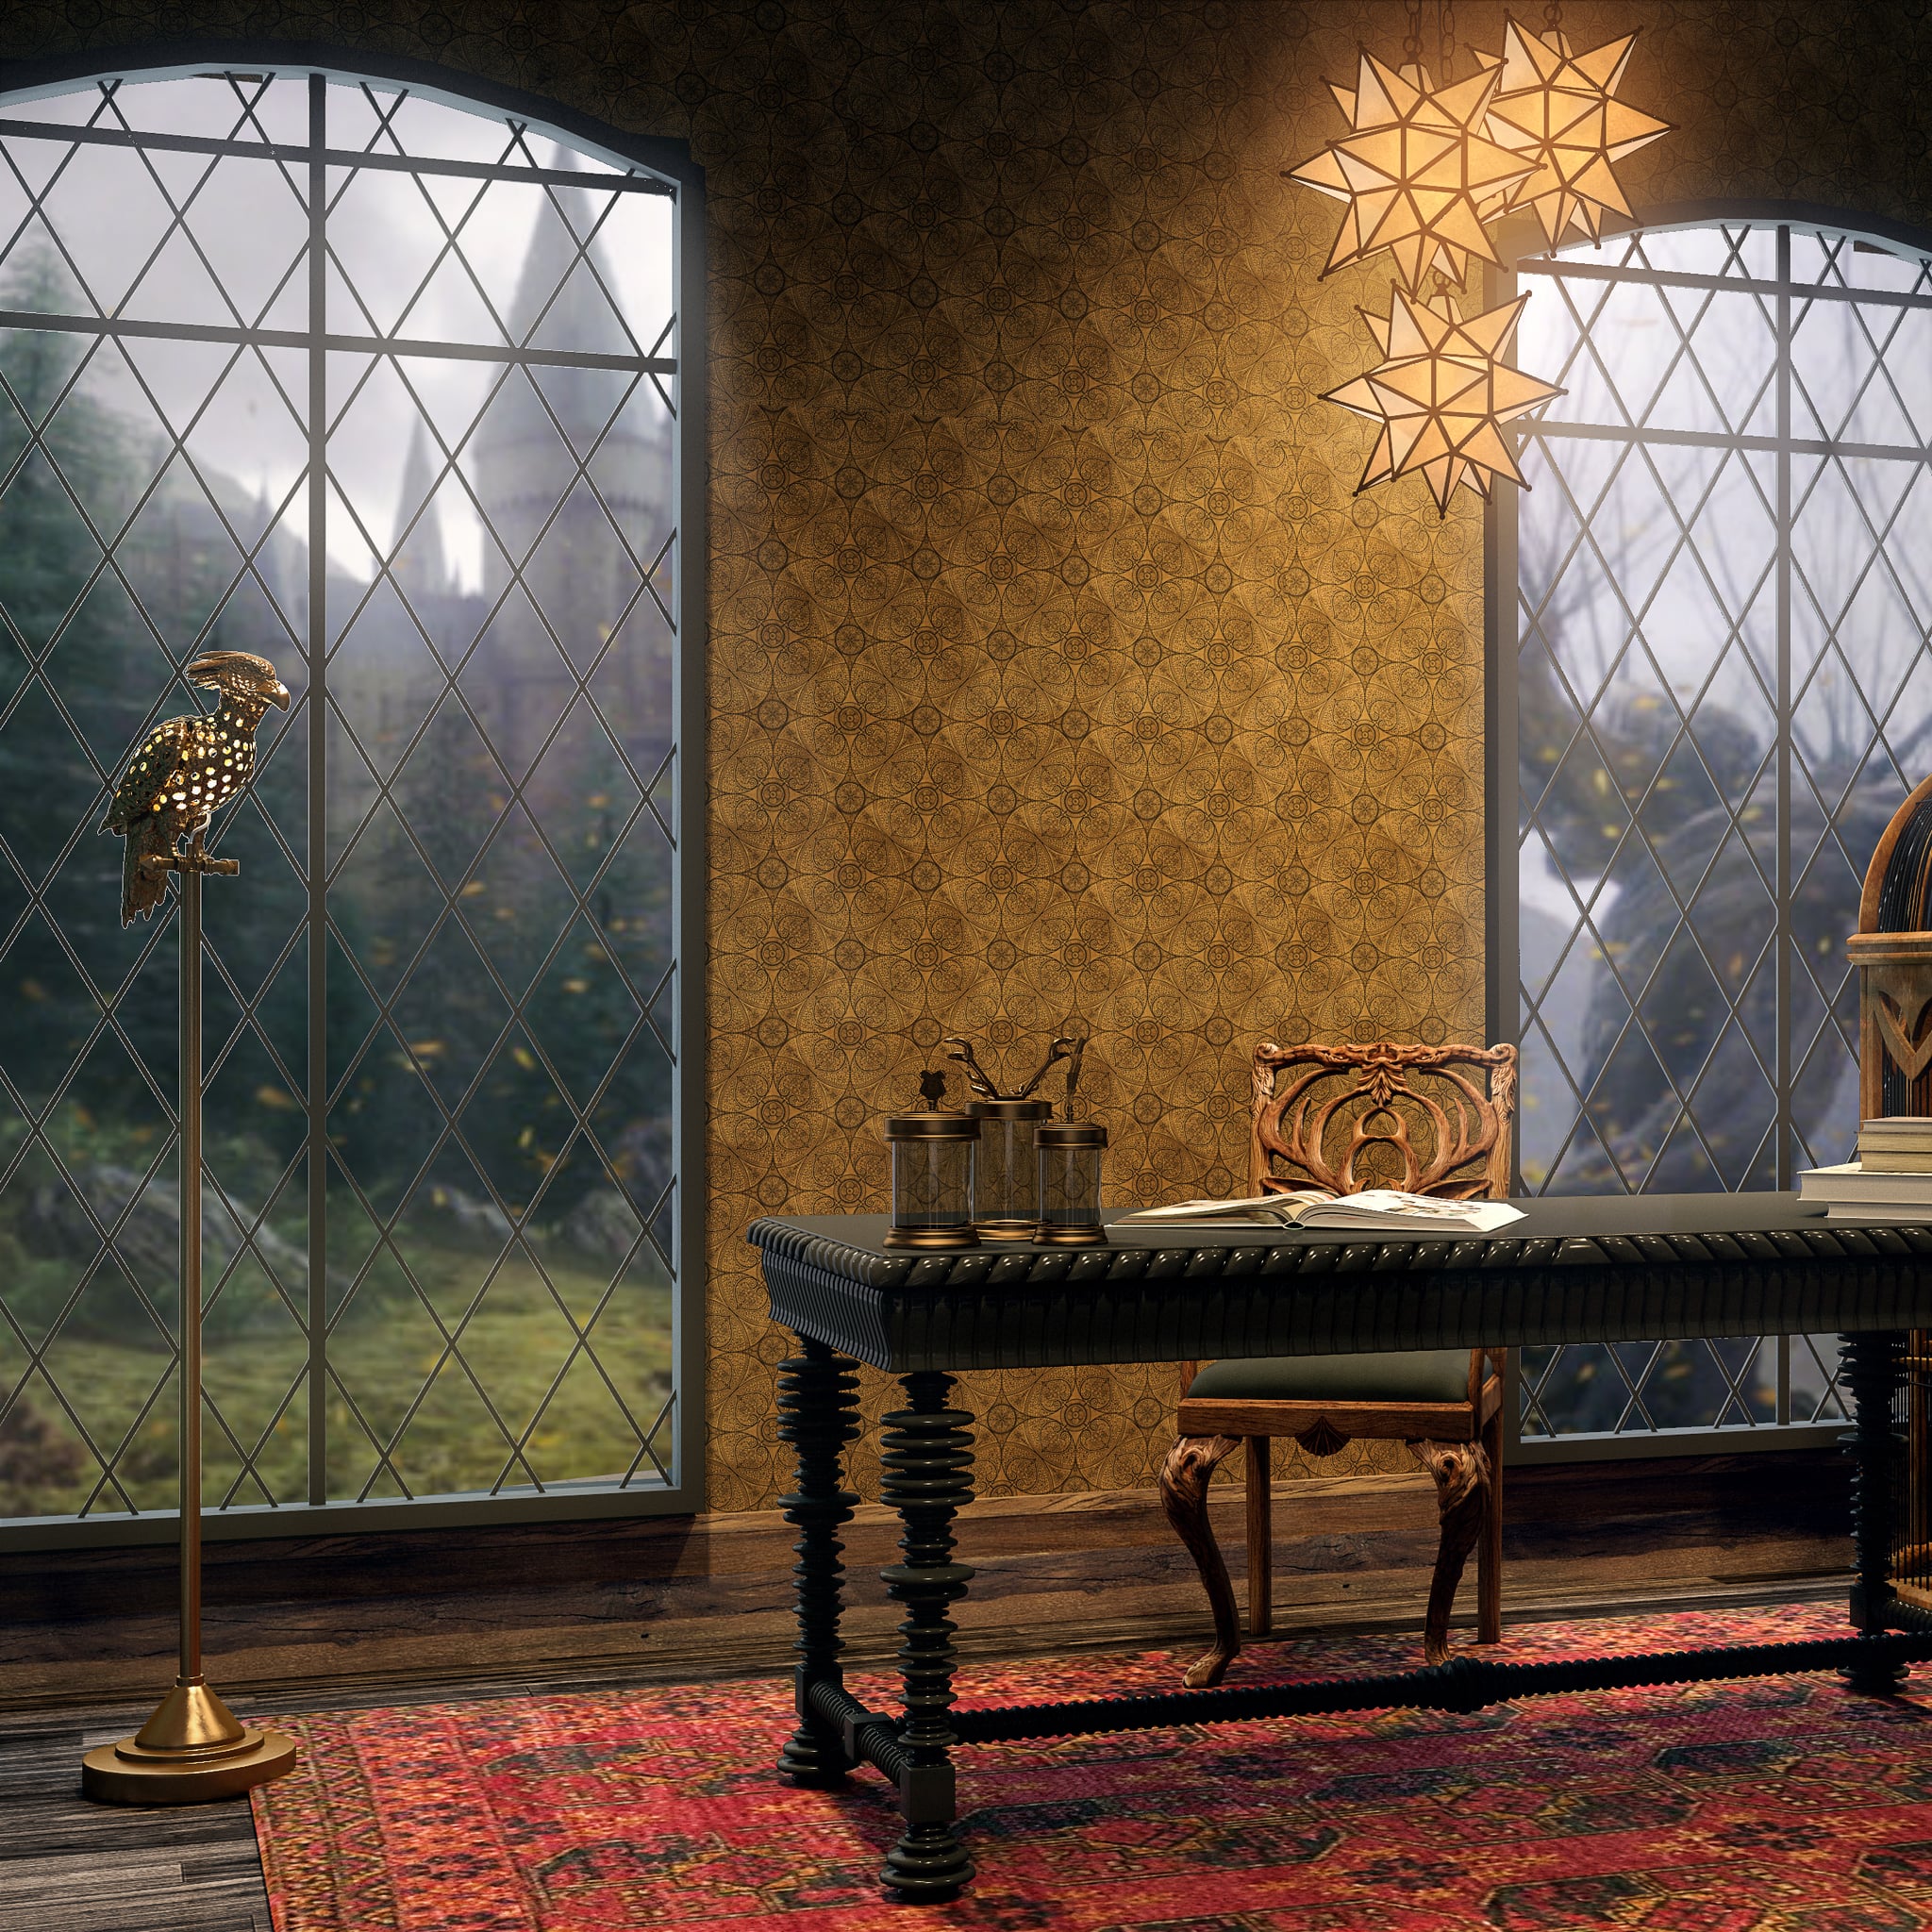 Harry Potter Home Decor For Adults Popsugar Home